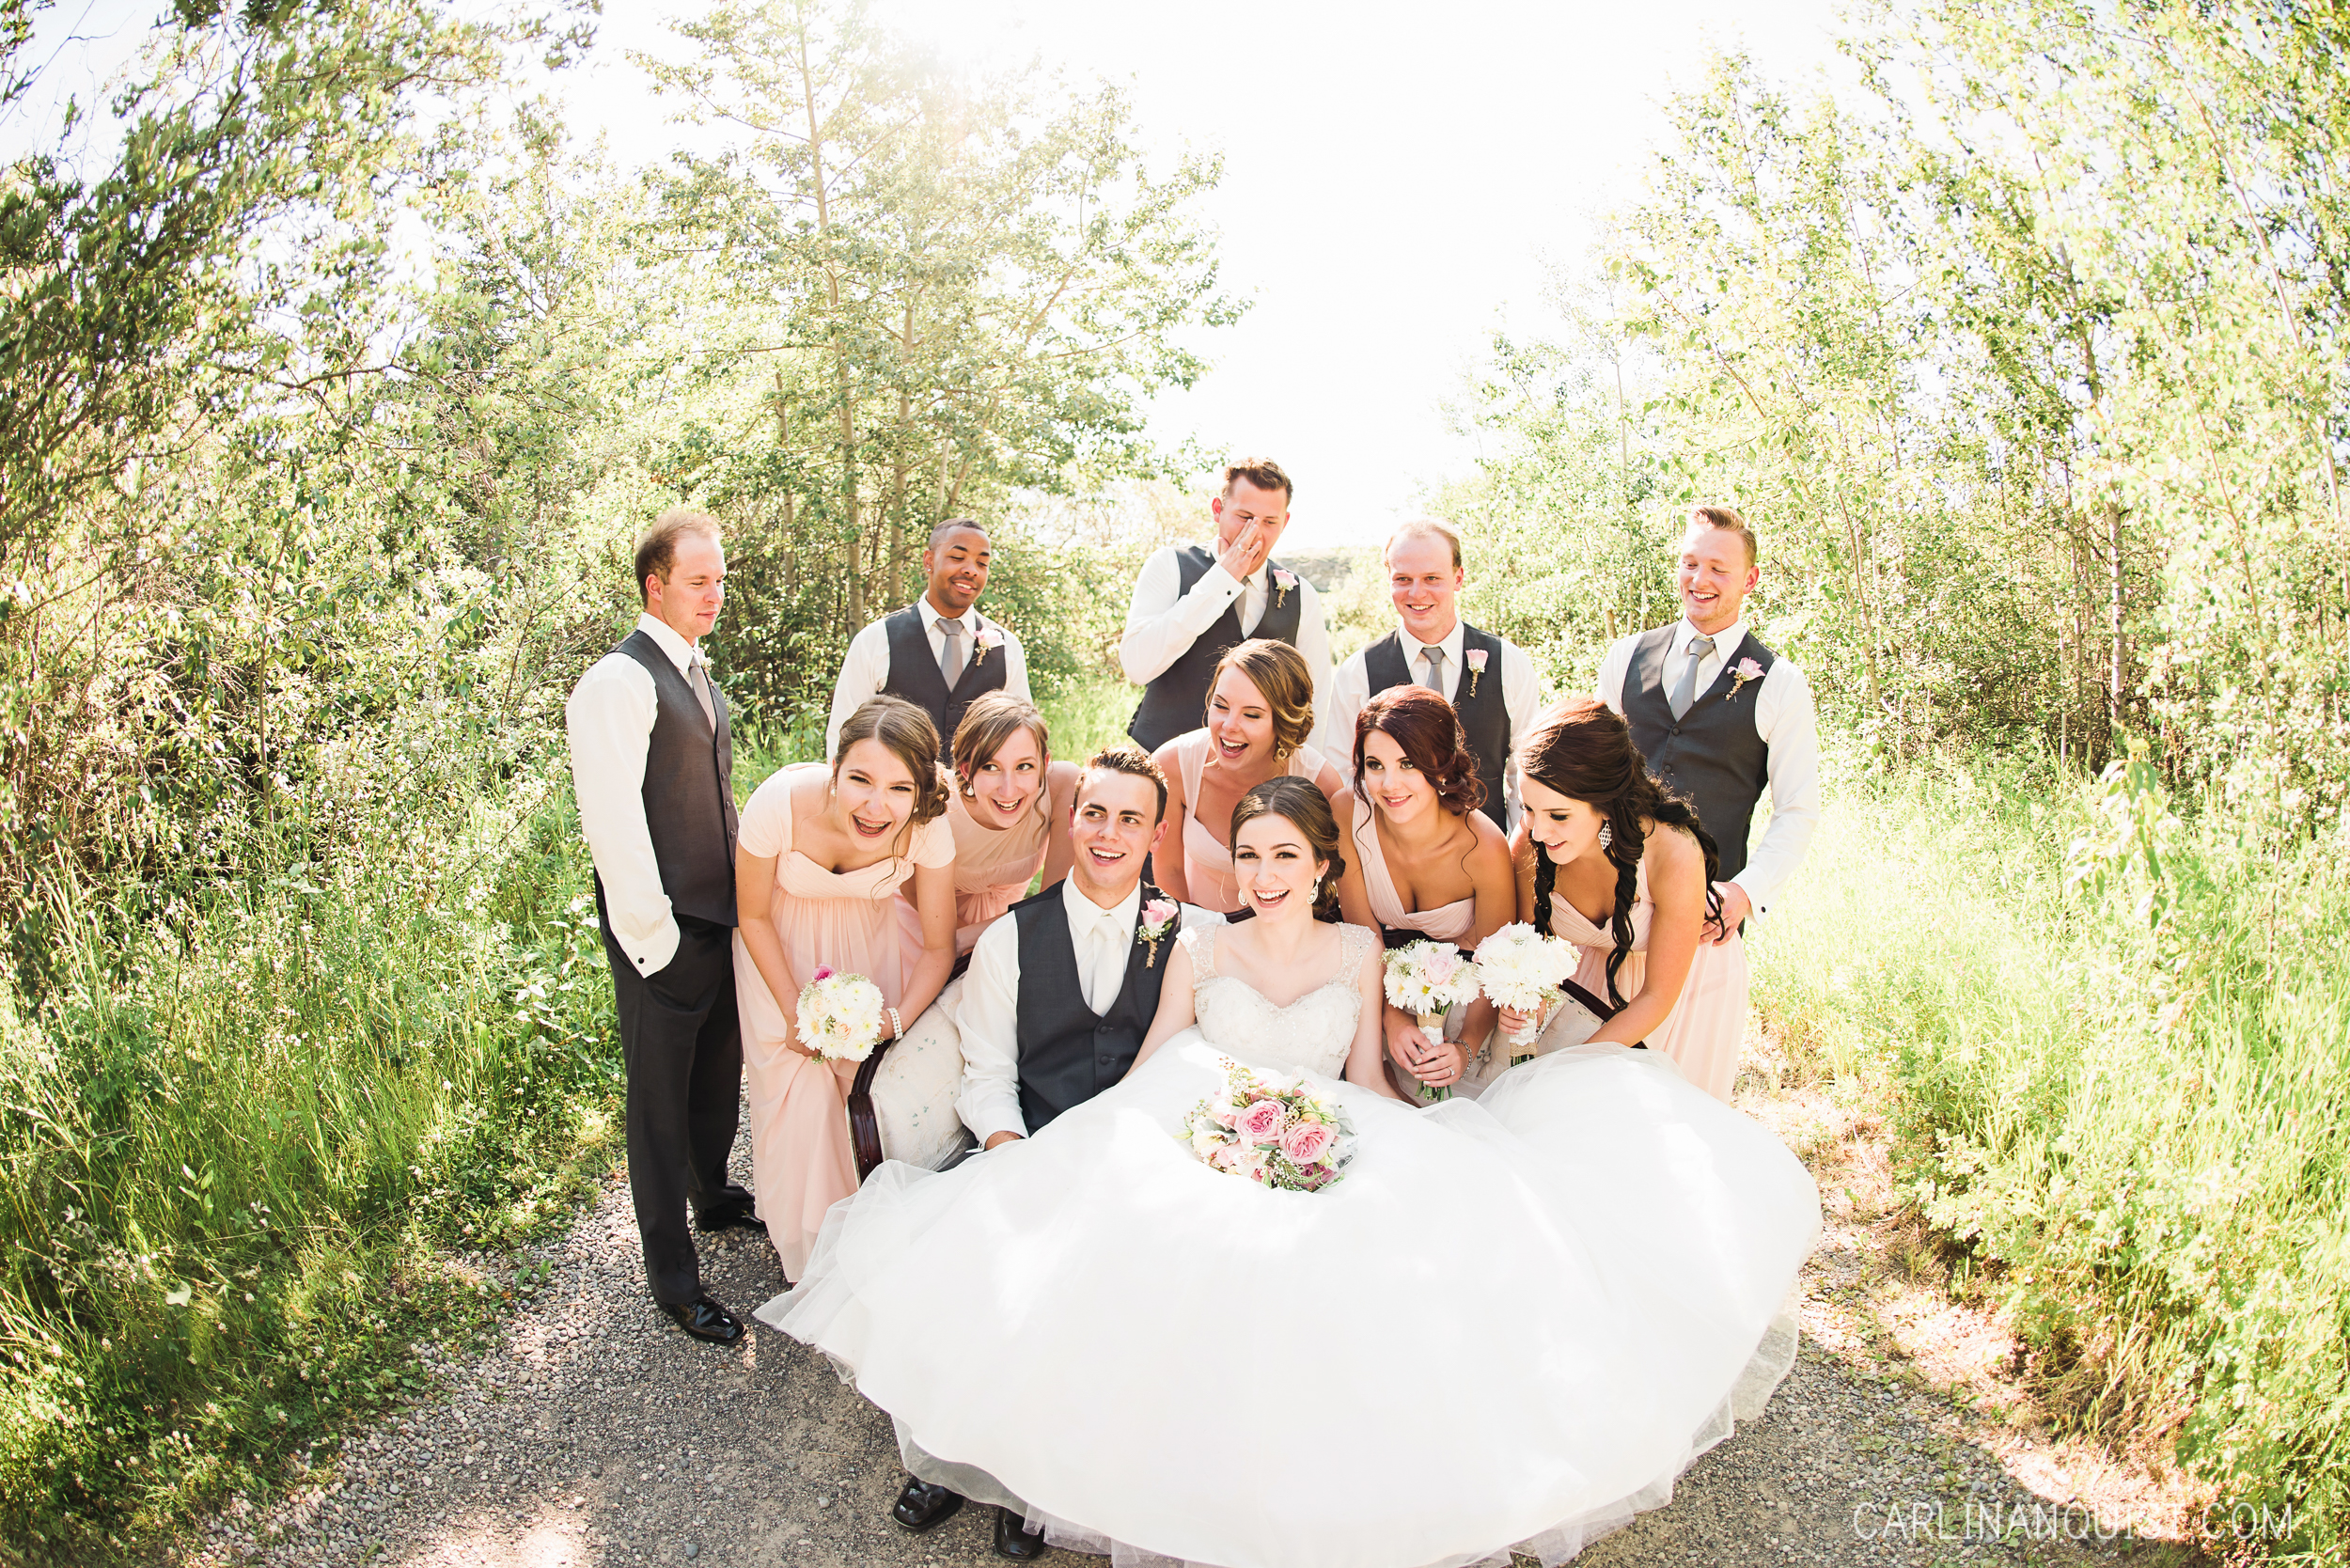 Fun Bridal Party Photos | Carlin Anquist Photography